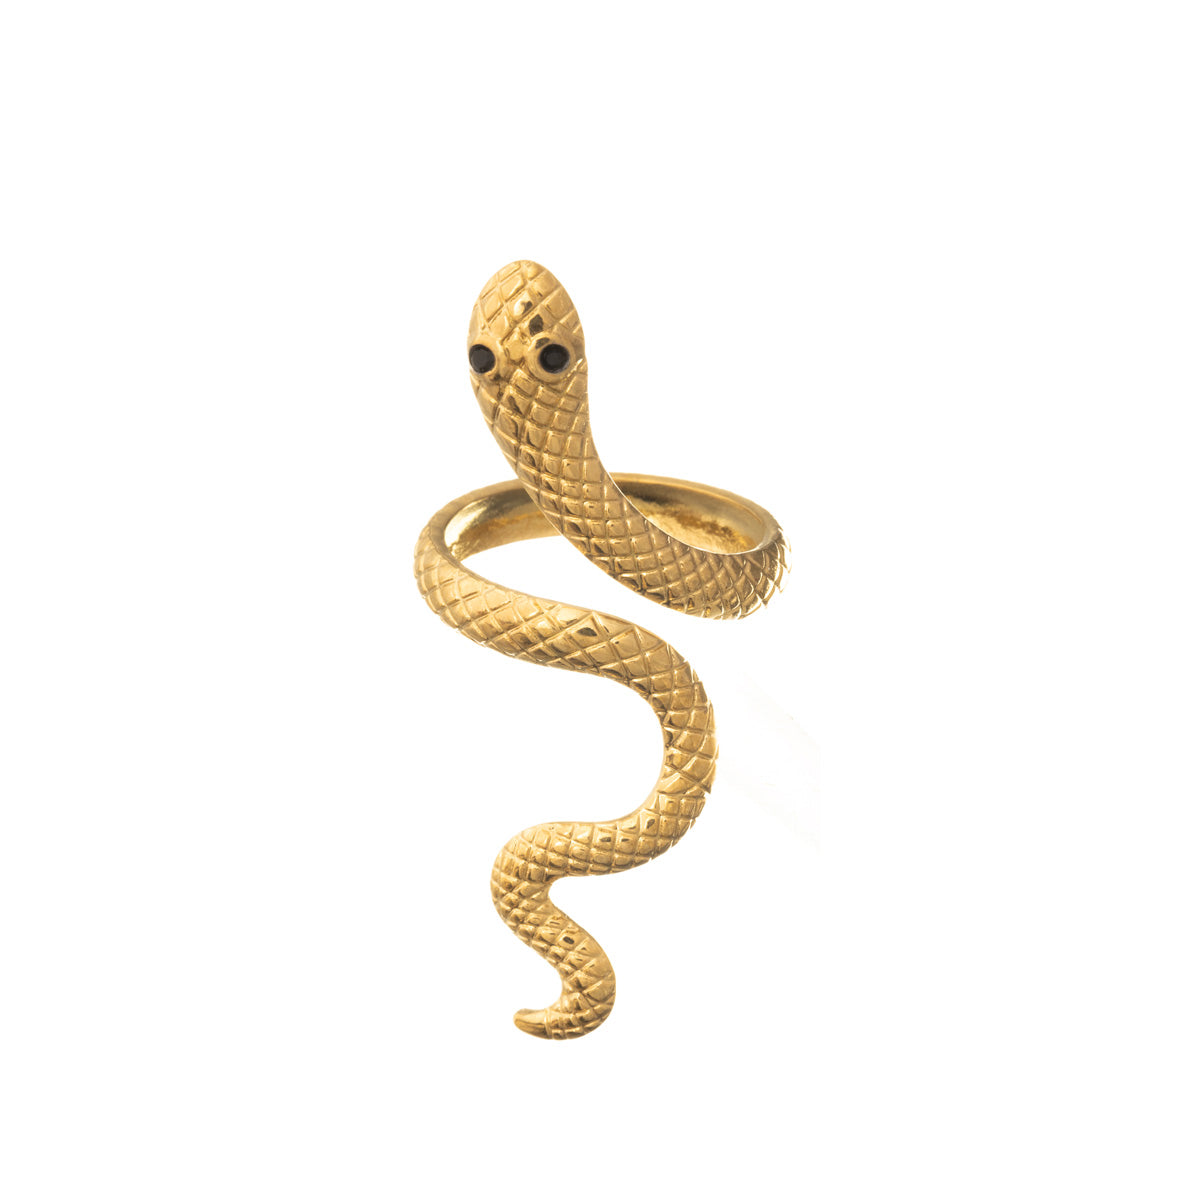 Käärme sormus kullattu terässormus (Teräs 316L)